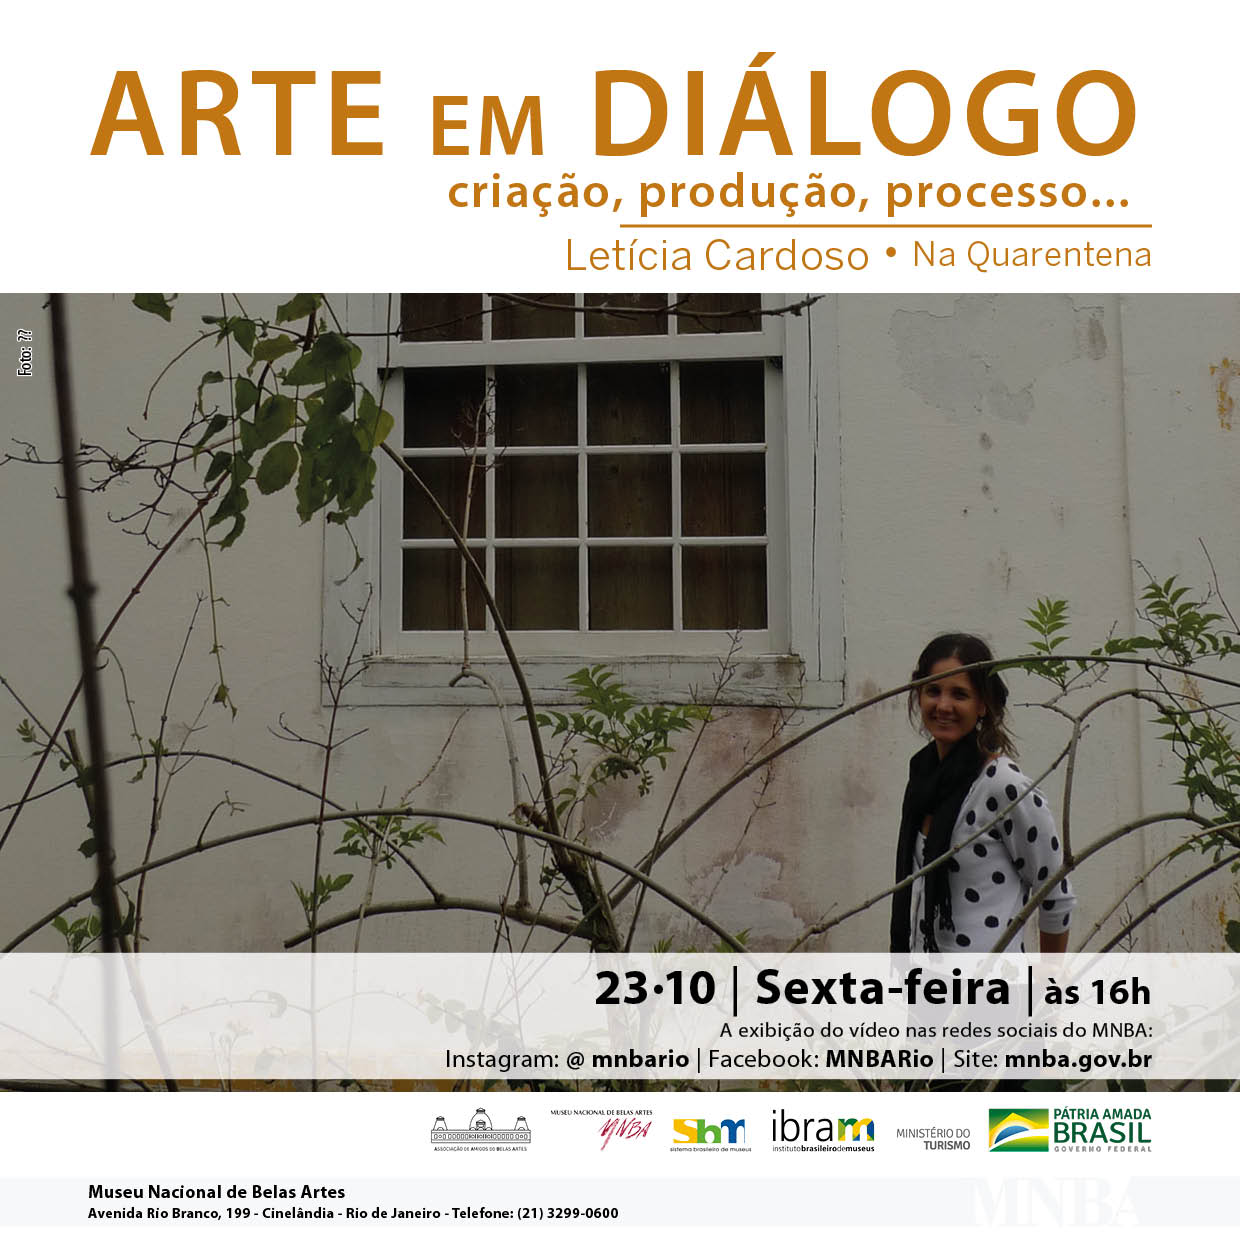 Kunst im Dialogprojekt, in Quarantäne, mit Letícia Cardoso. Bekanntgabe.